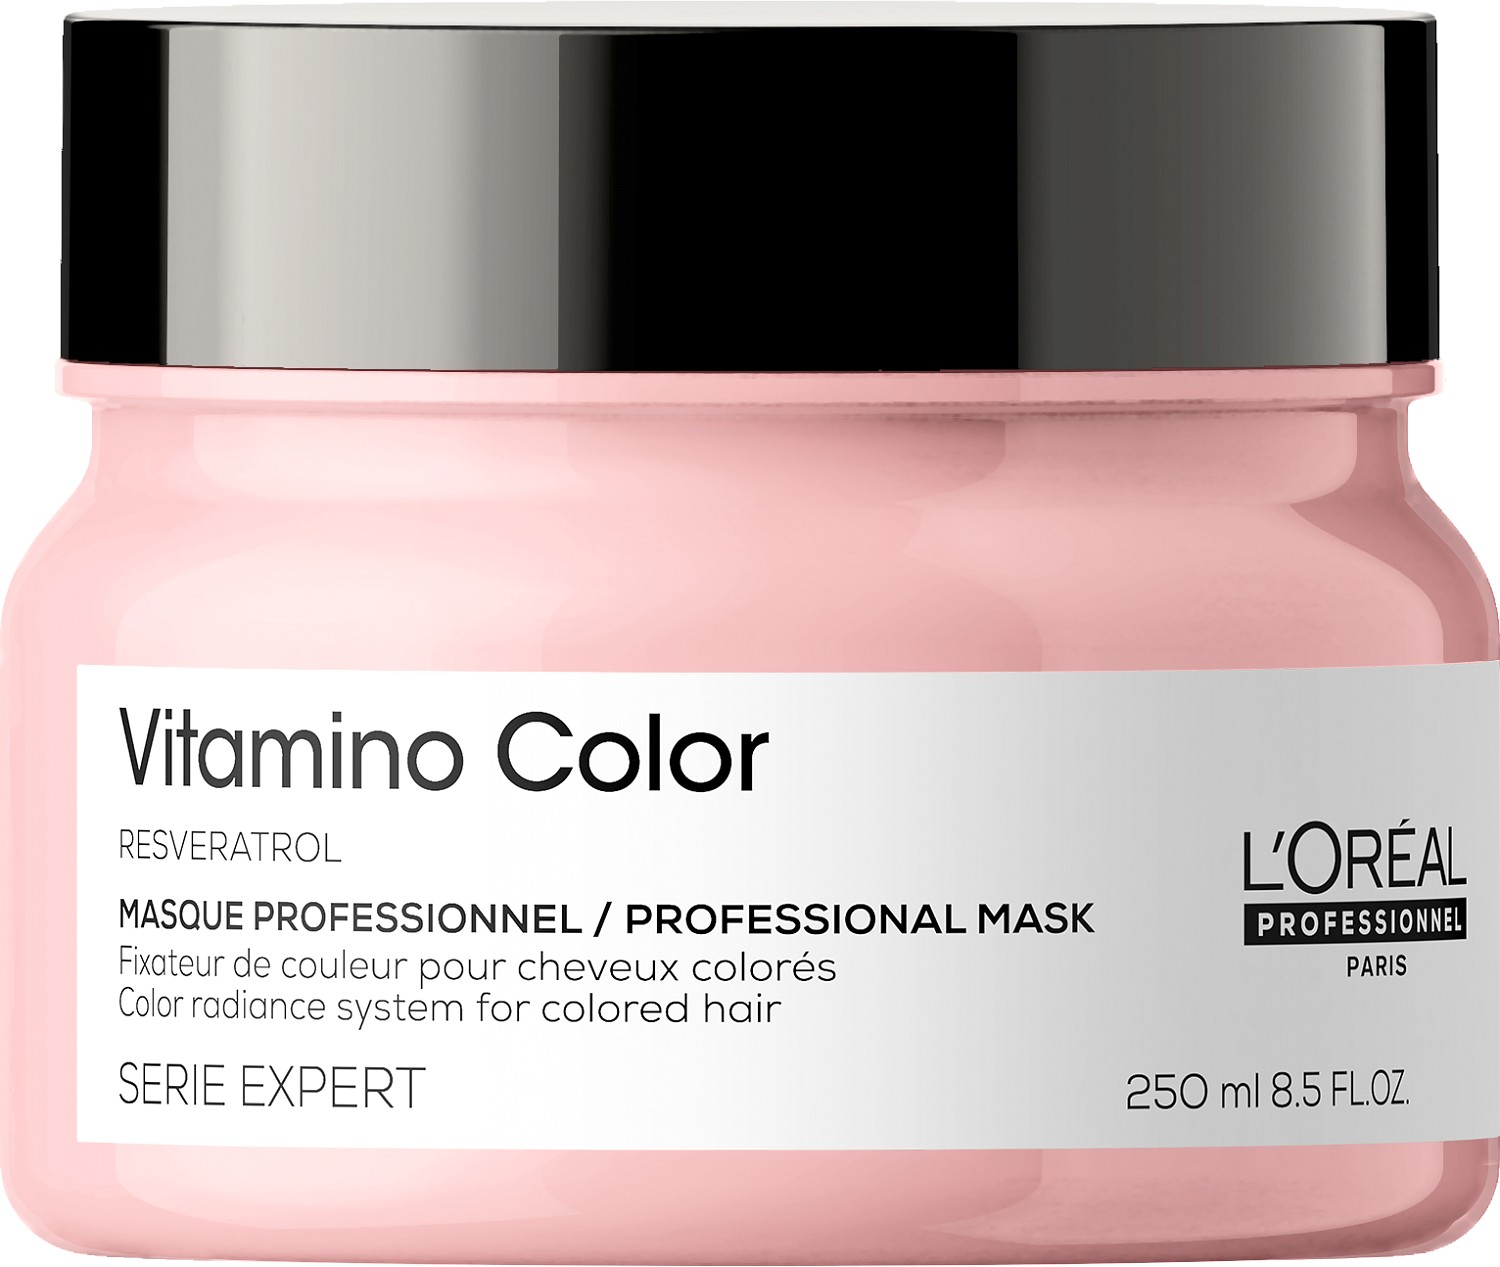  Loreal Vitamino Color Resveratrol Mask 250 ml 